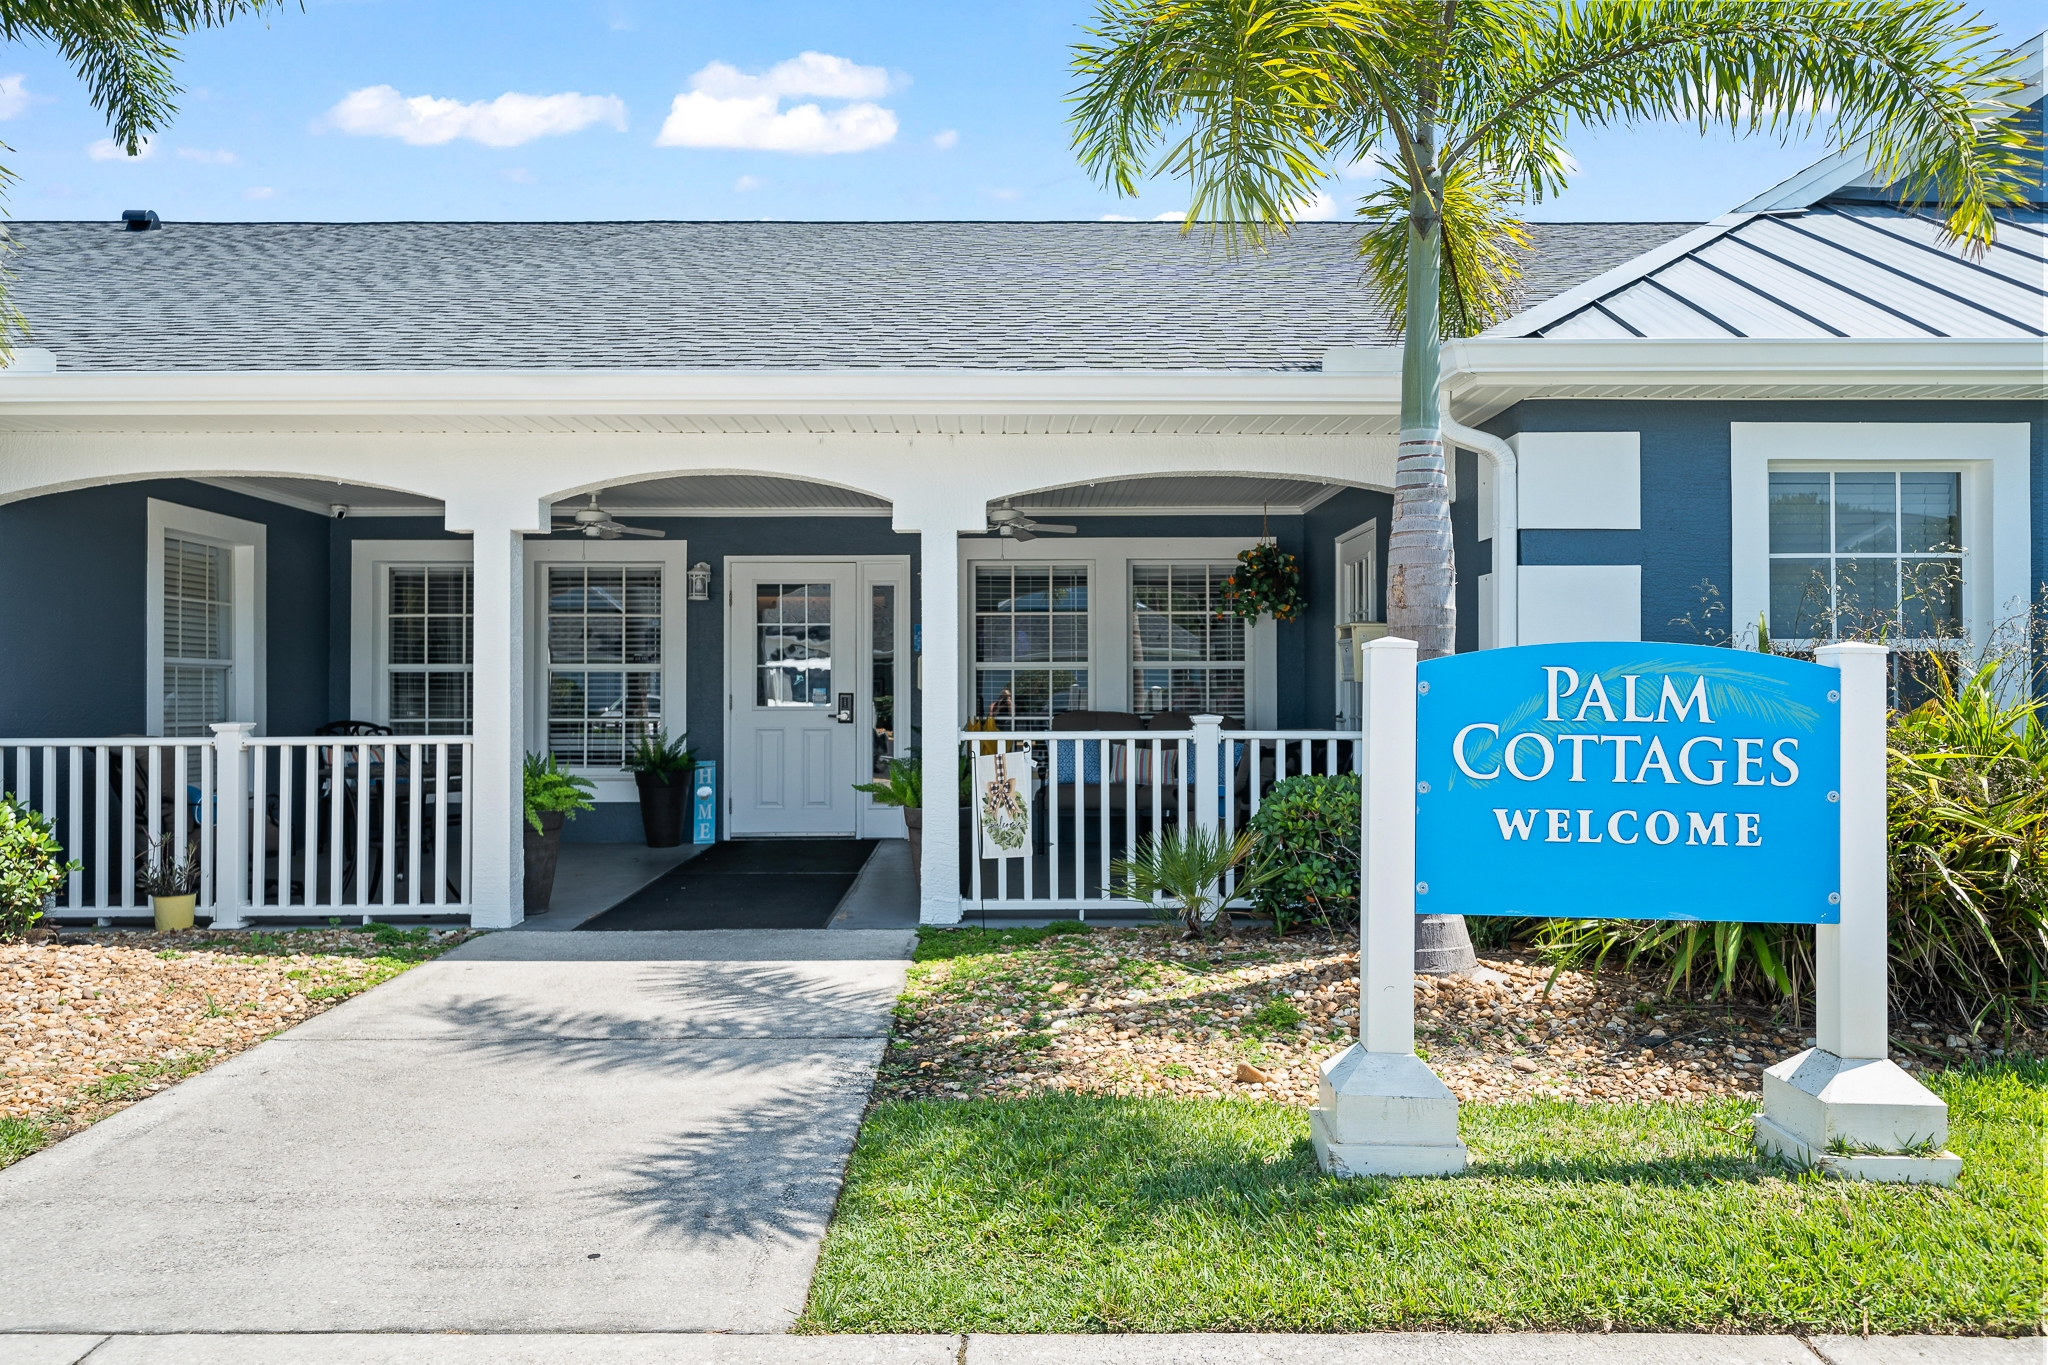 Palm Cottages image